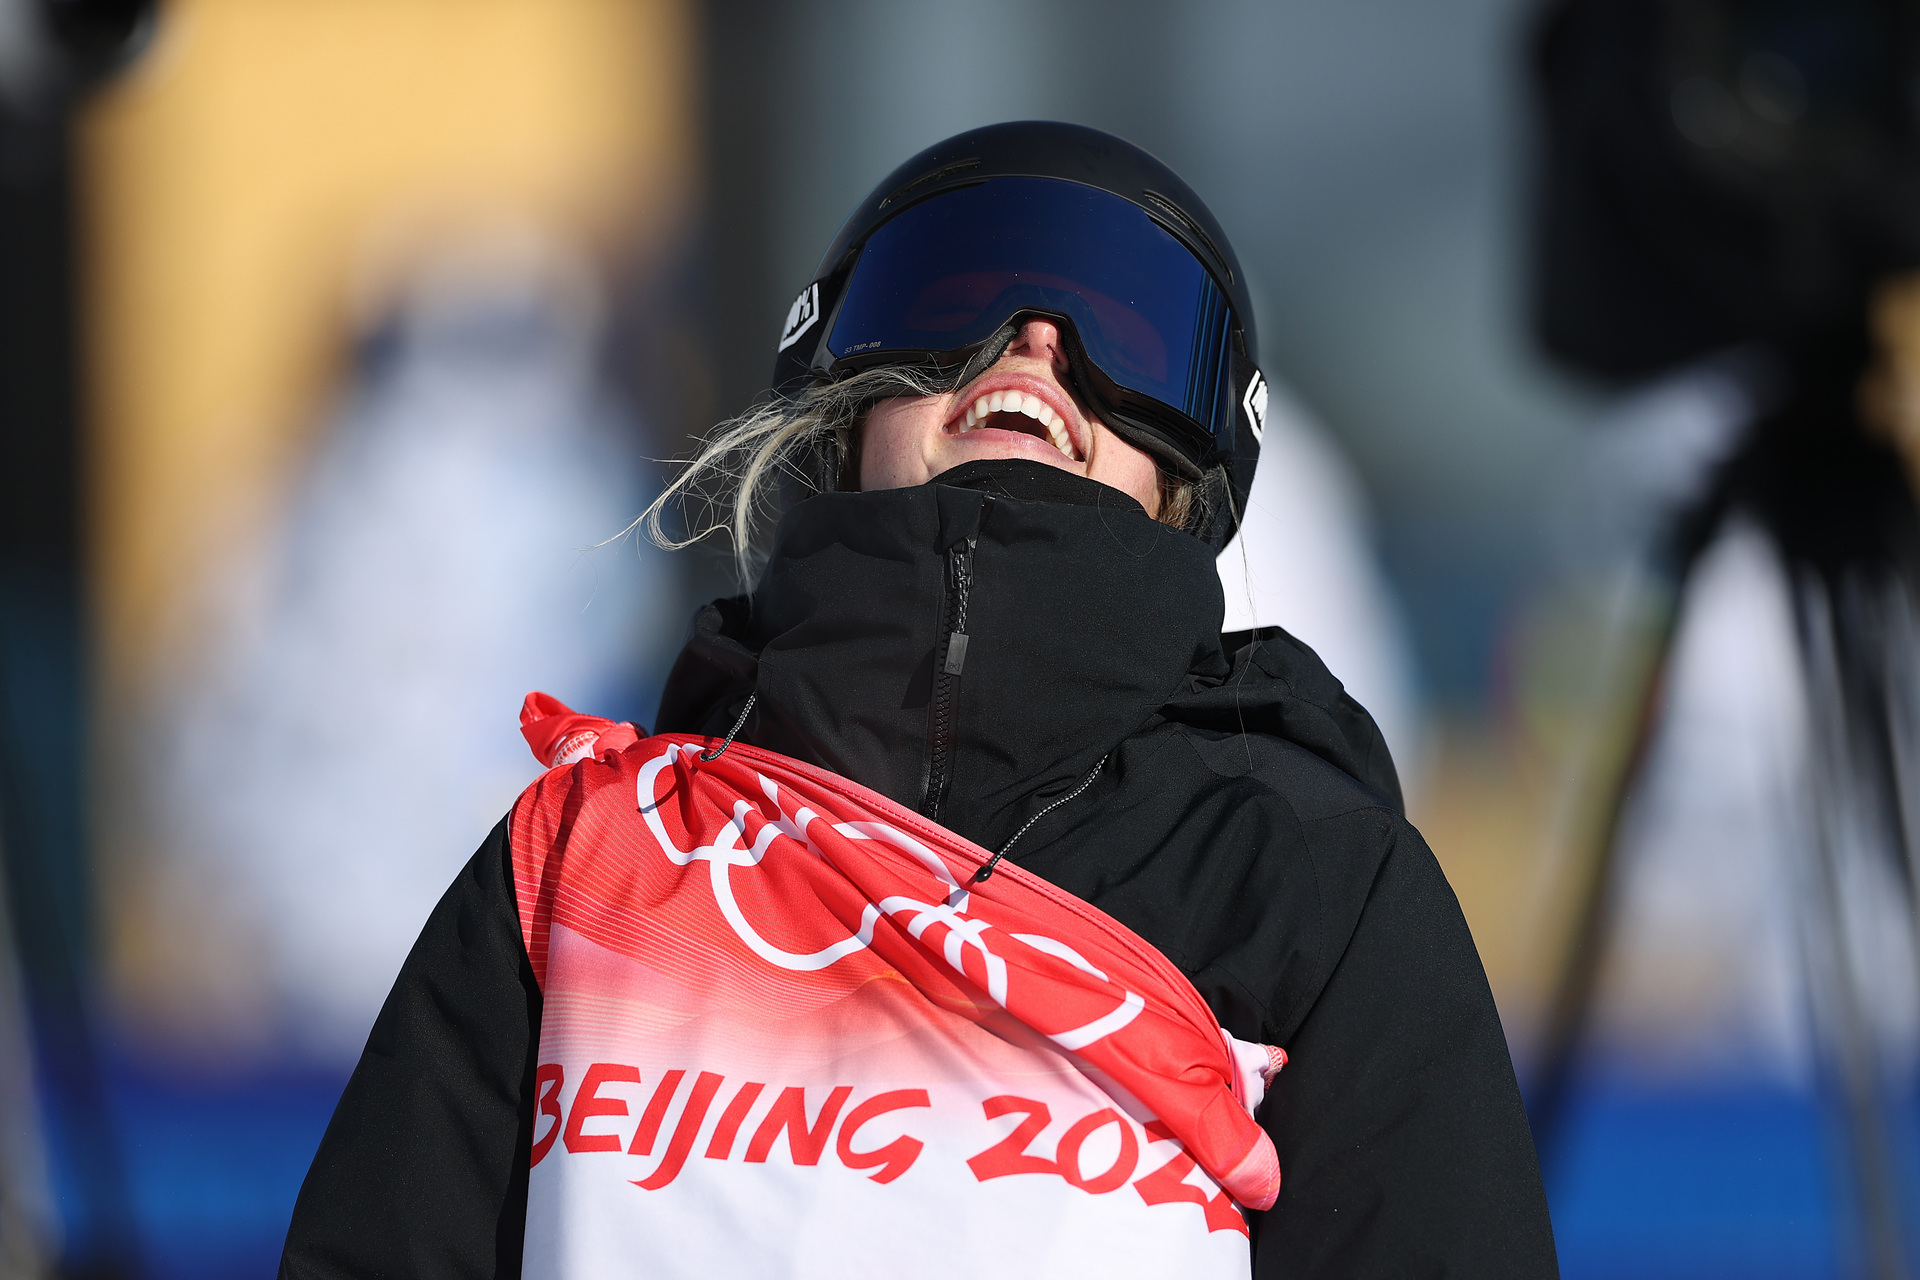 Beijing Winter Olympics 2022 Zoi Sadowski-Synnotts hilarious reaction to winning gold in snowboard slopestyle